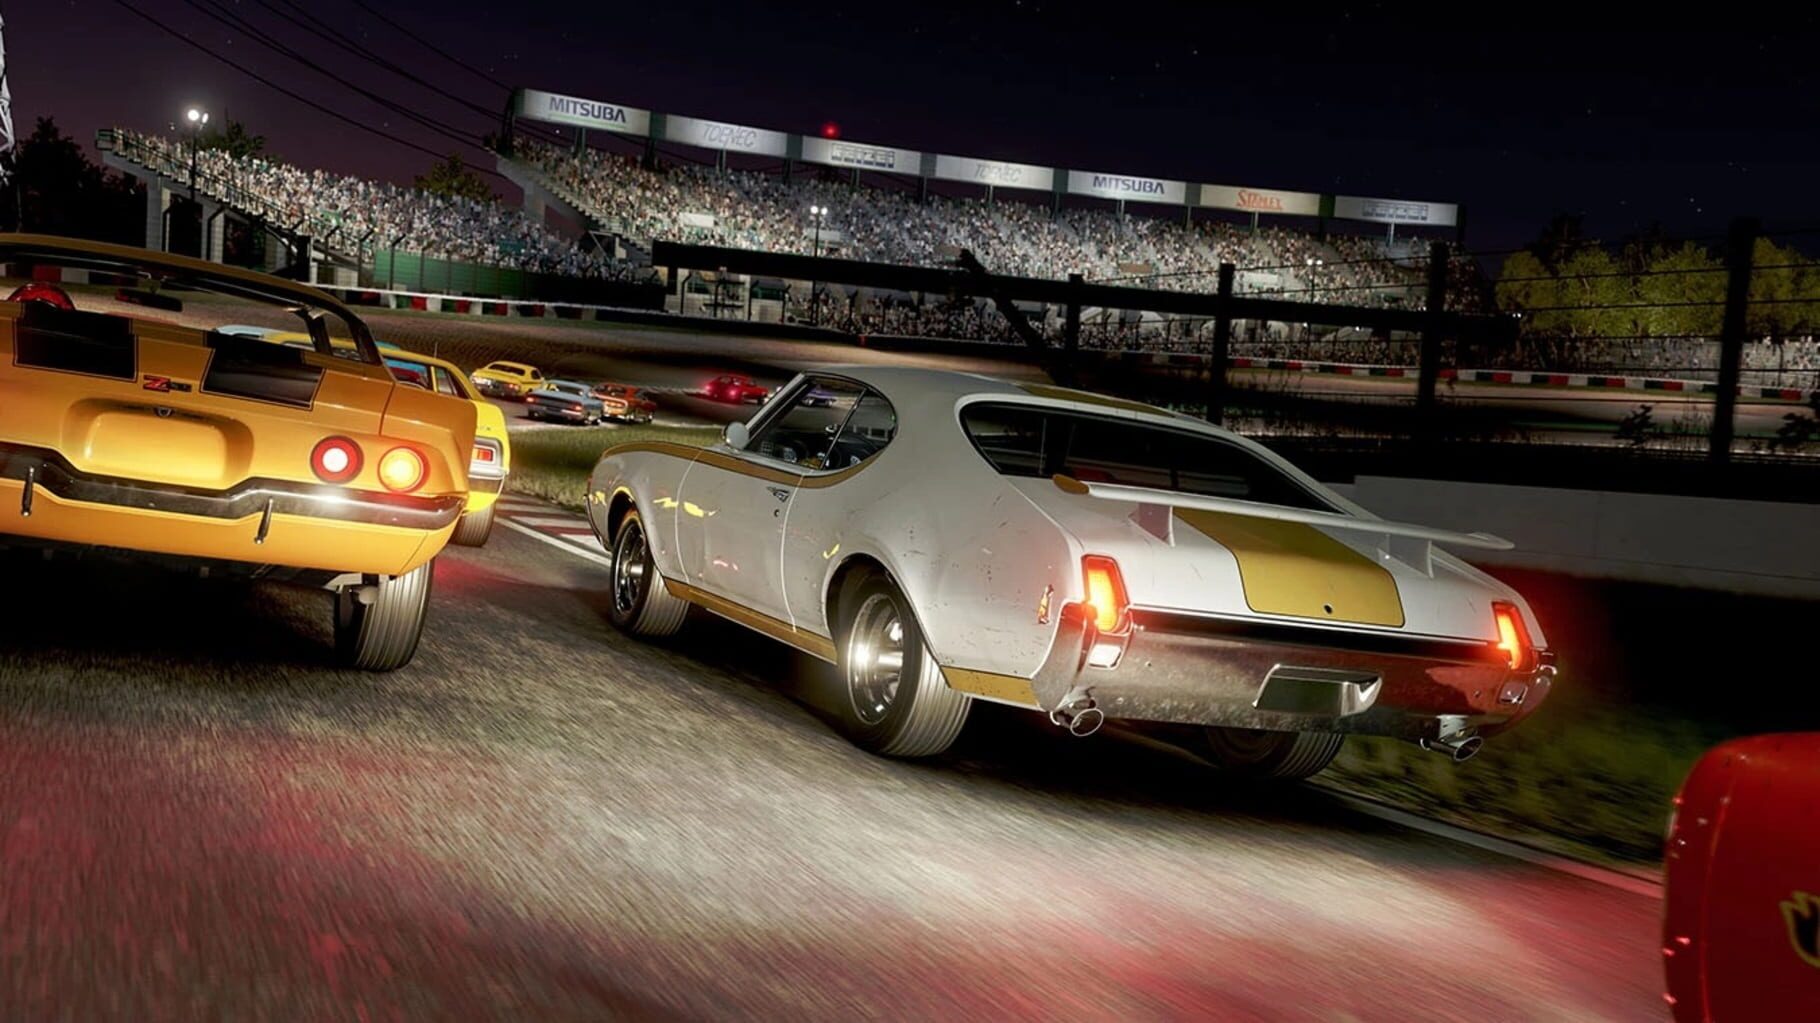 Forza Motorsport Image